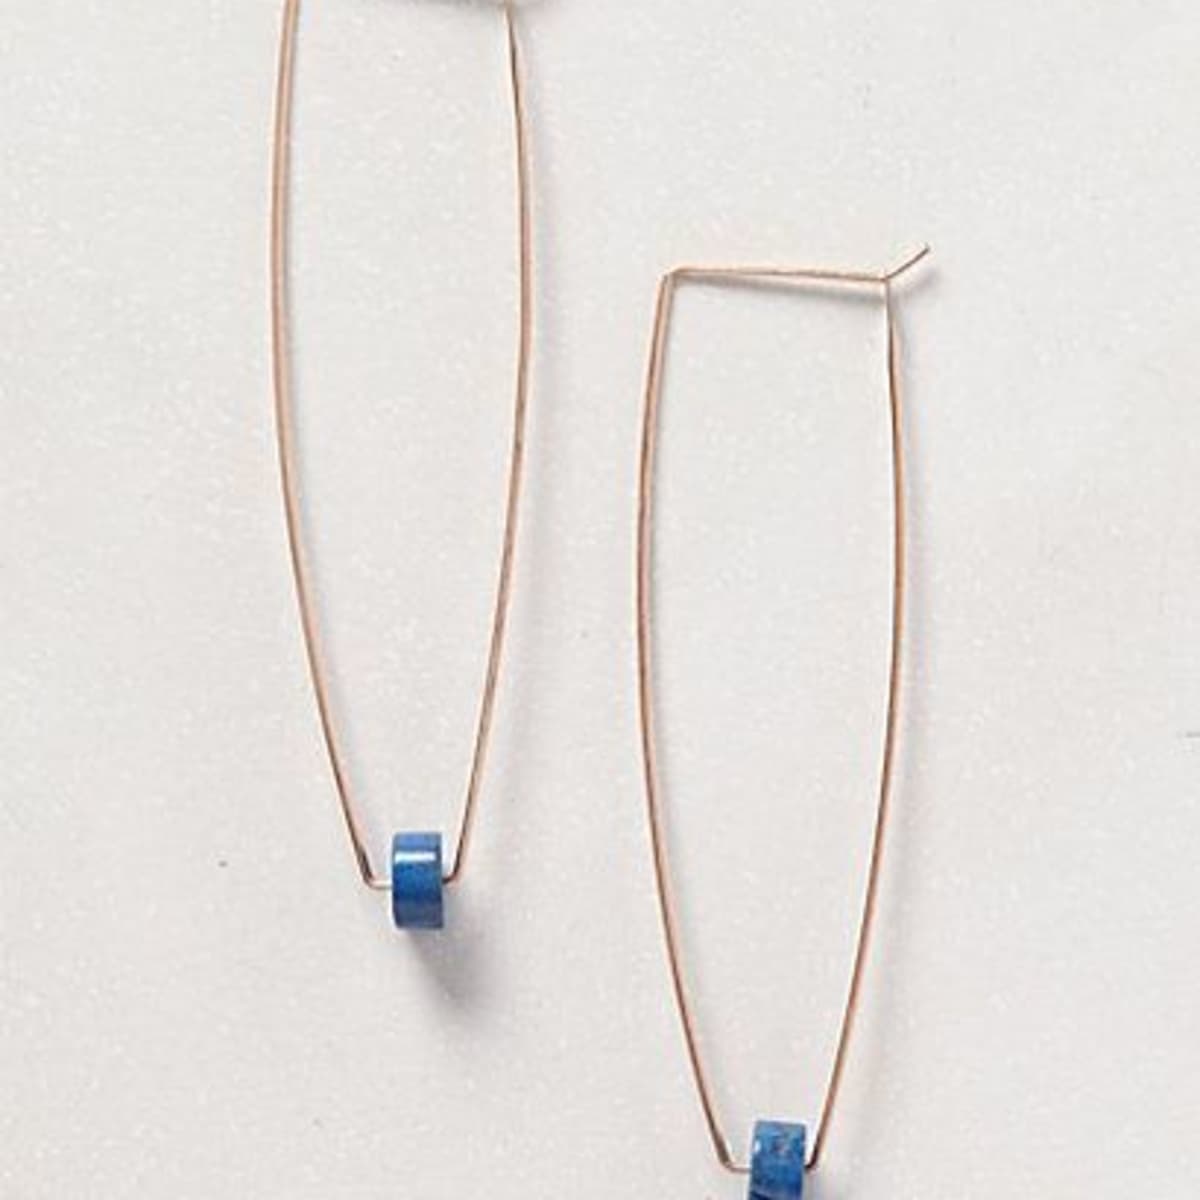 22 Gauge Jewelry Wire, Anezus Rose Gold Craft Wire Algeria